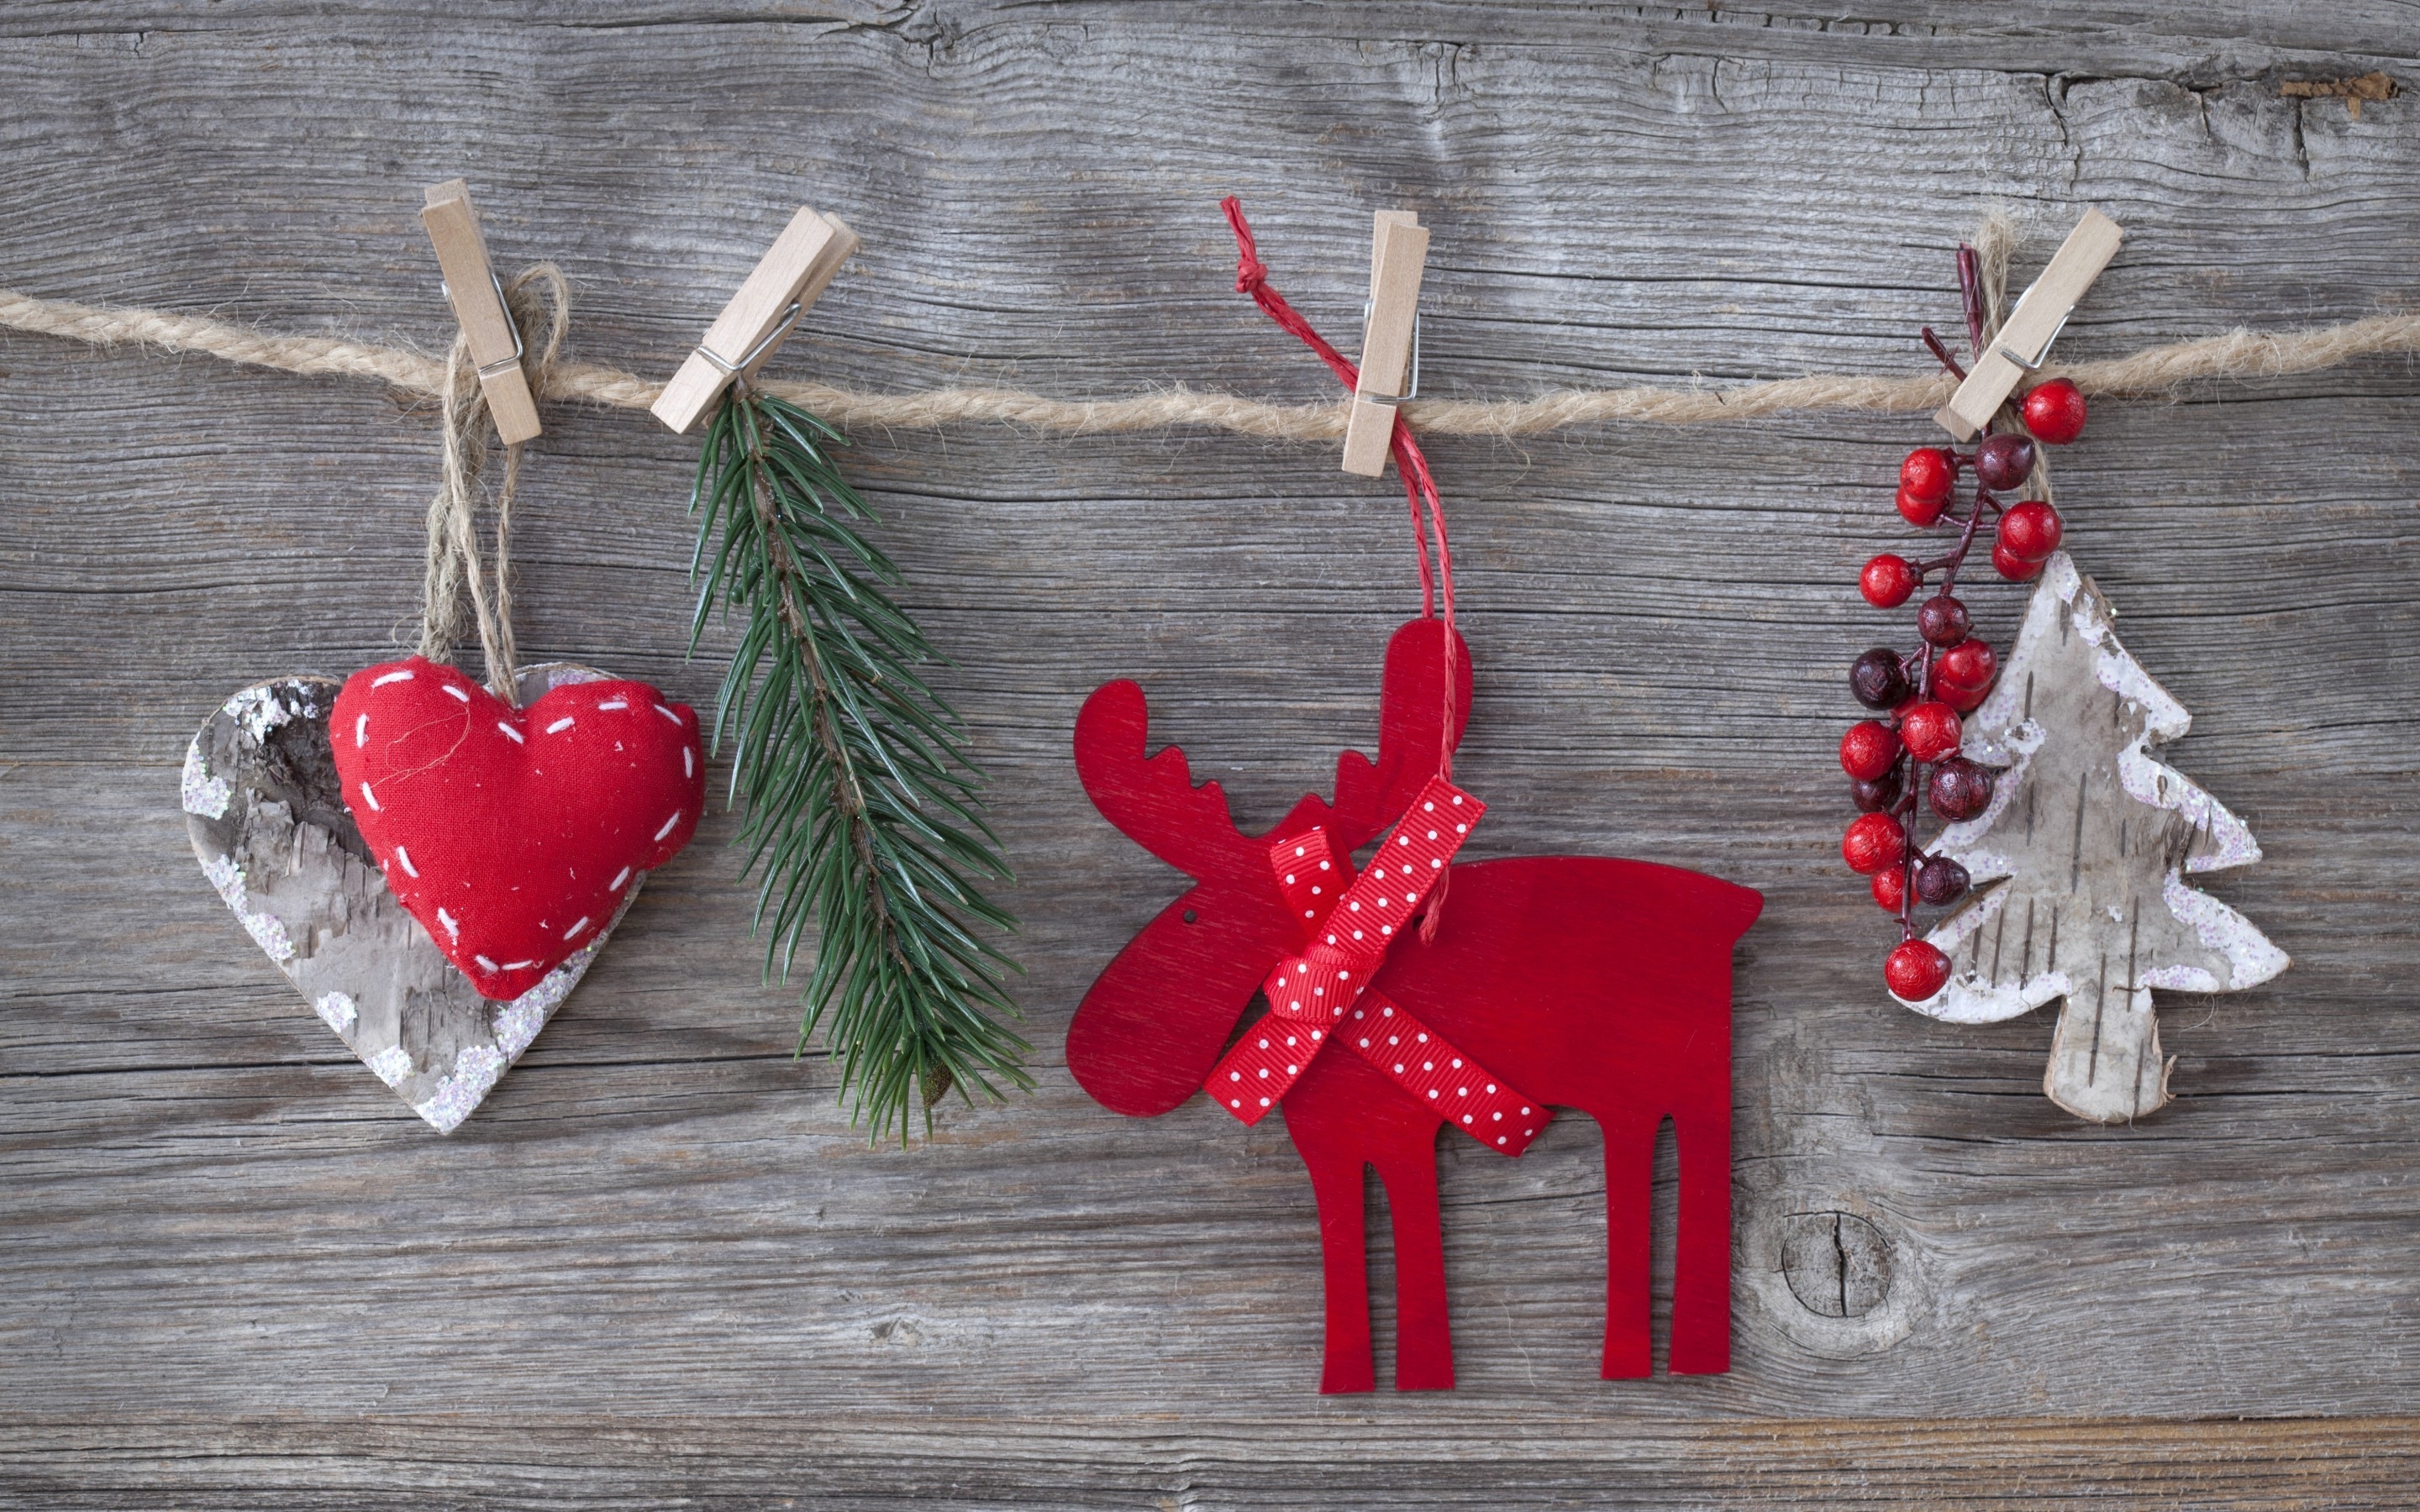 Handmade Ornaments for Christmas for 2880 x 1800 Retina Display resolution